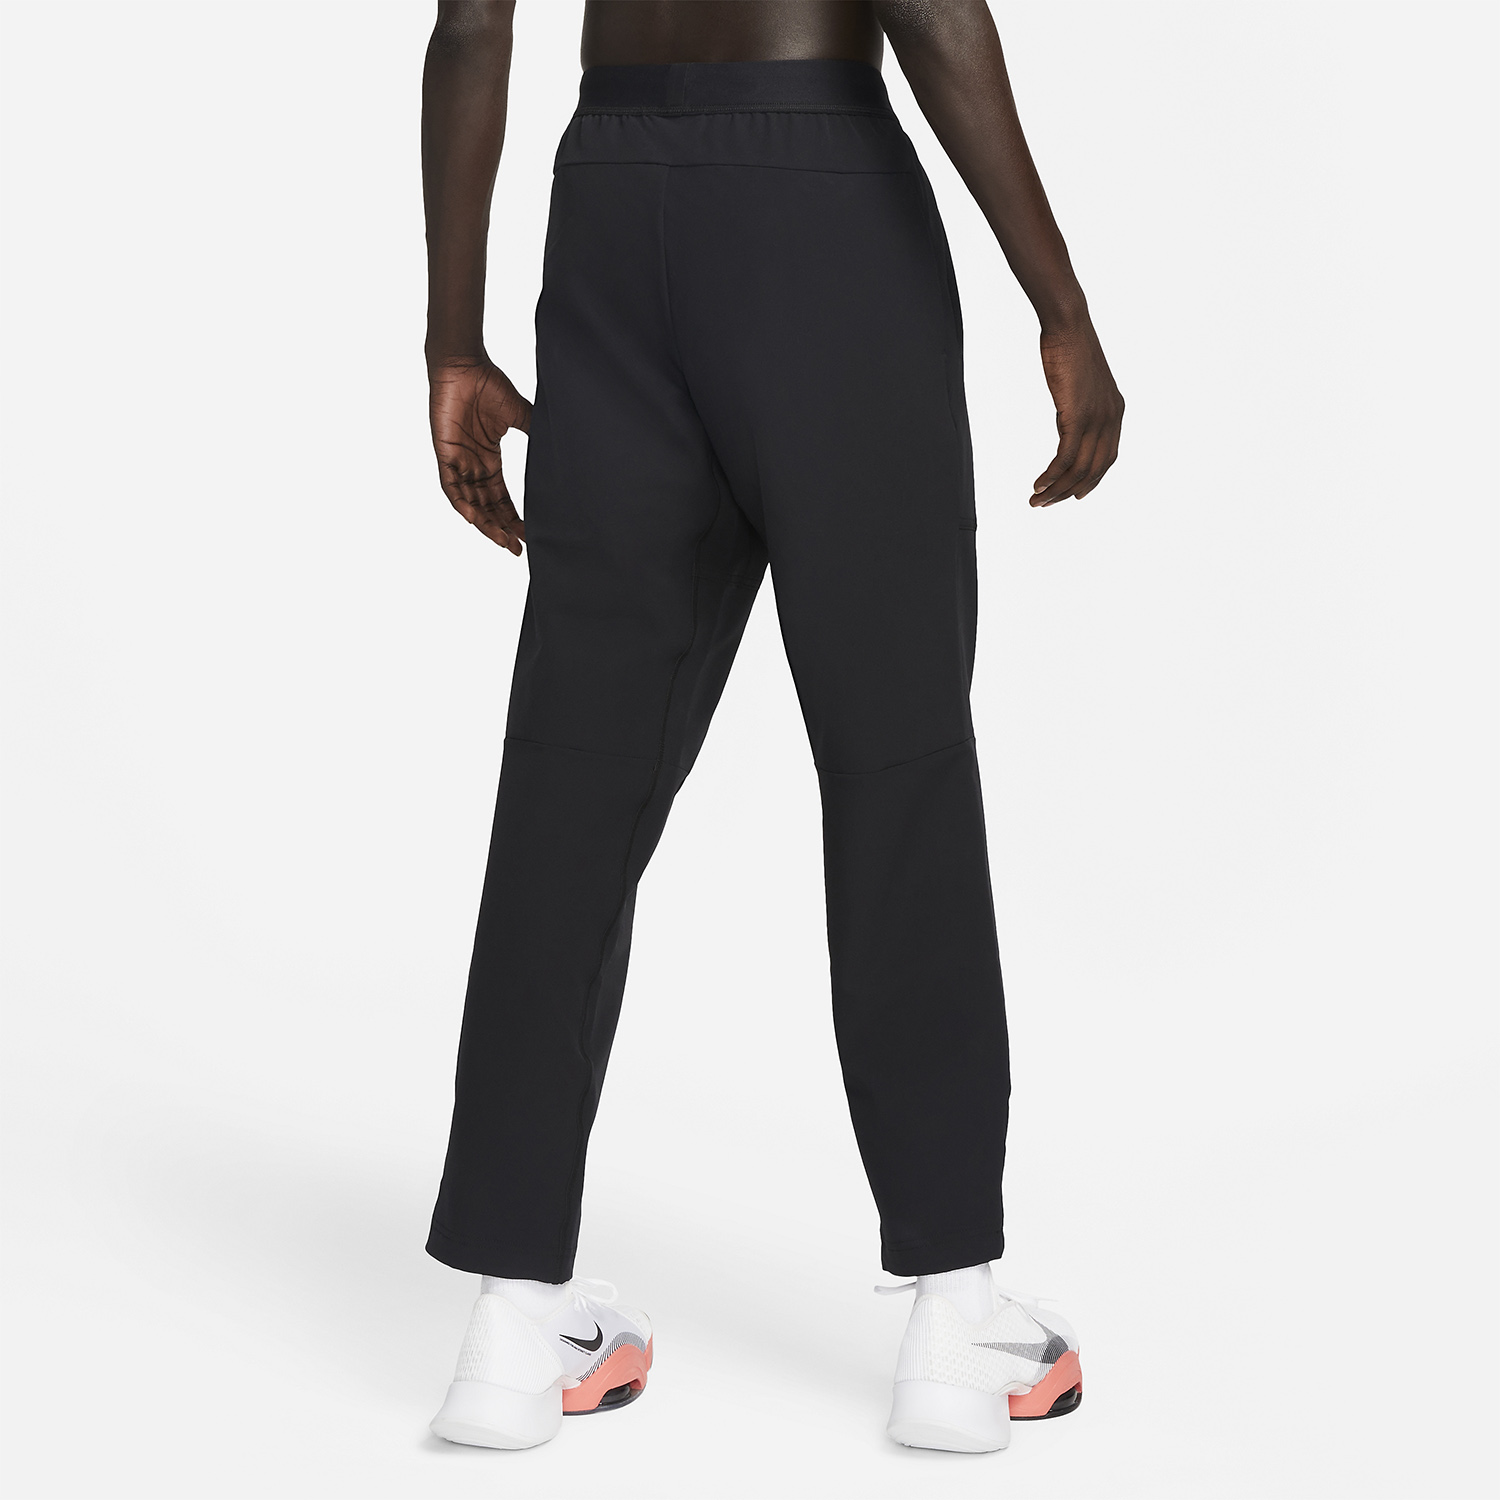 Nike Flex Vent Max Men's Running Pants - Black/White